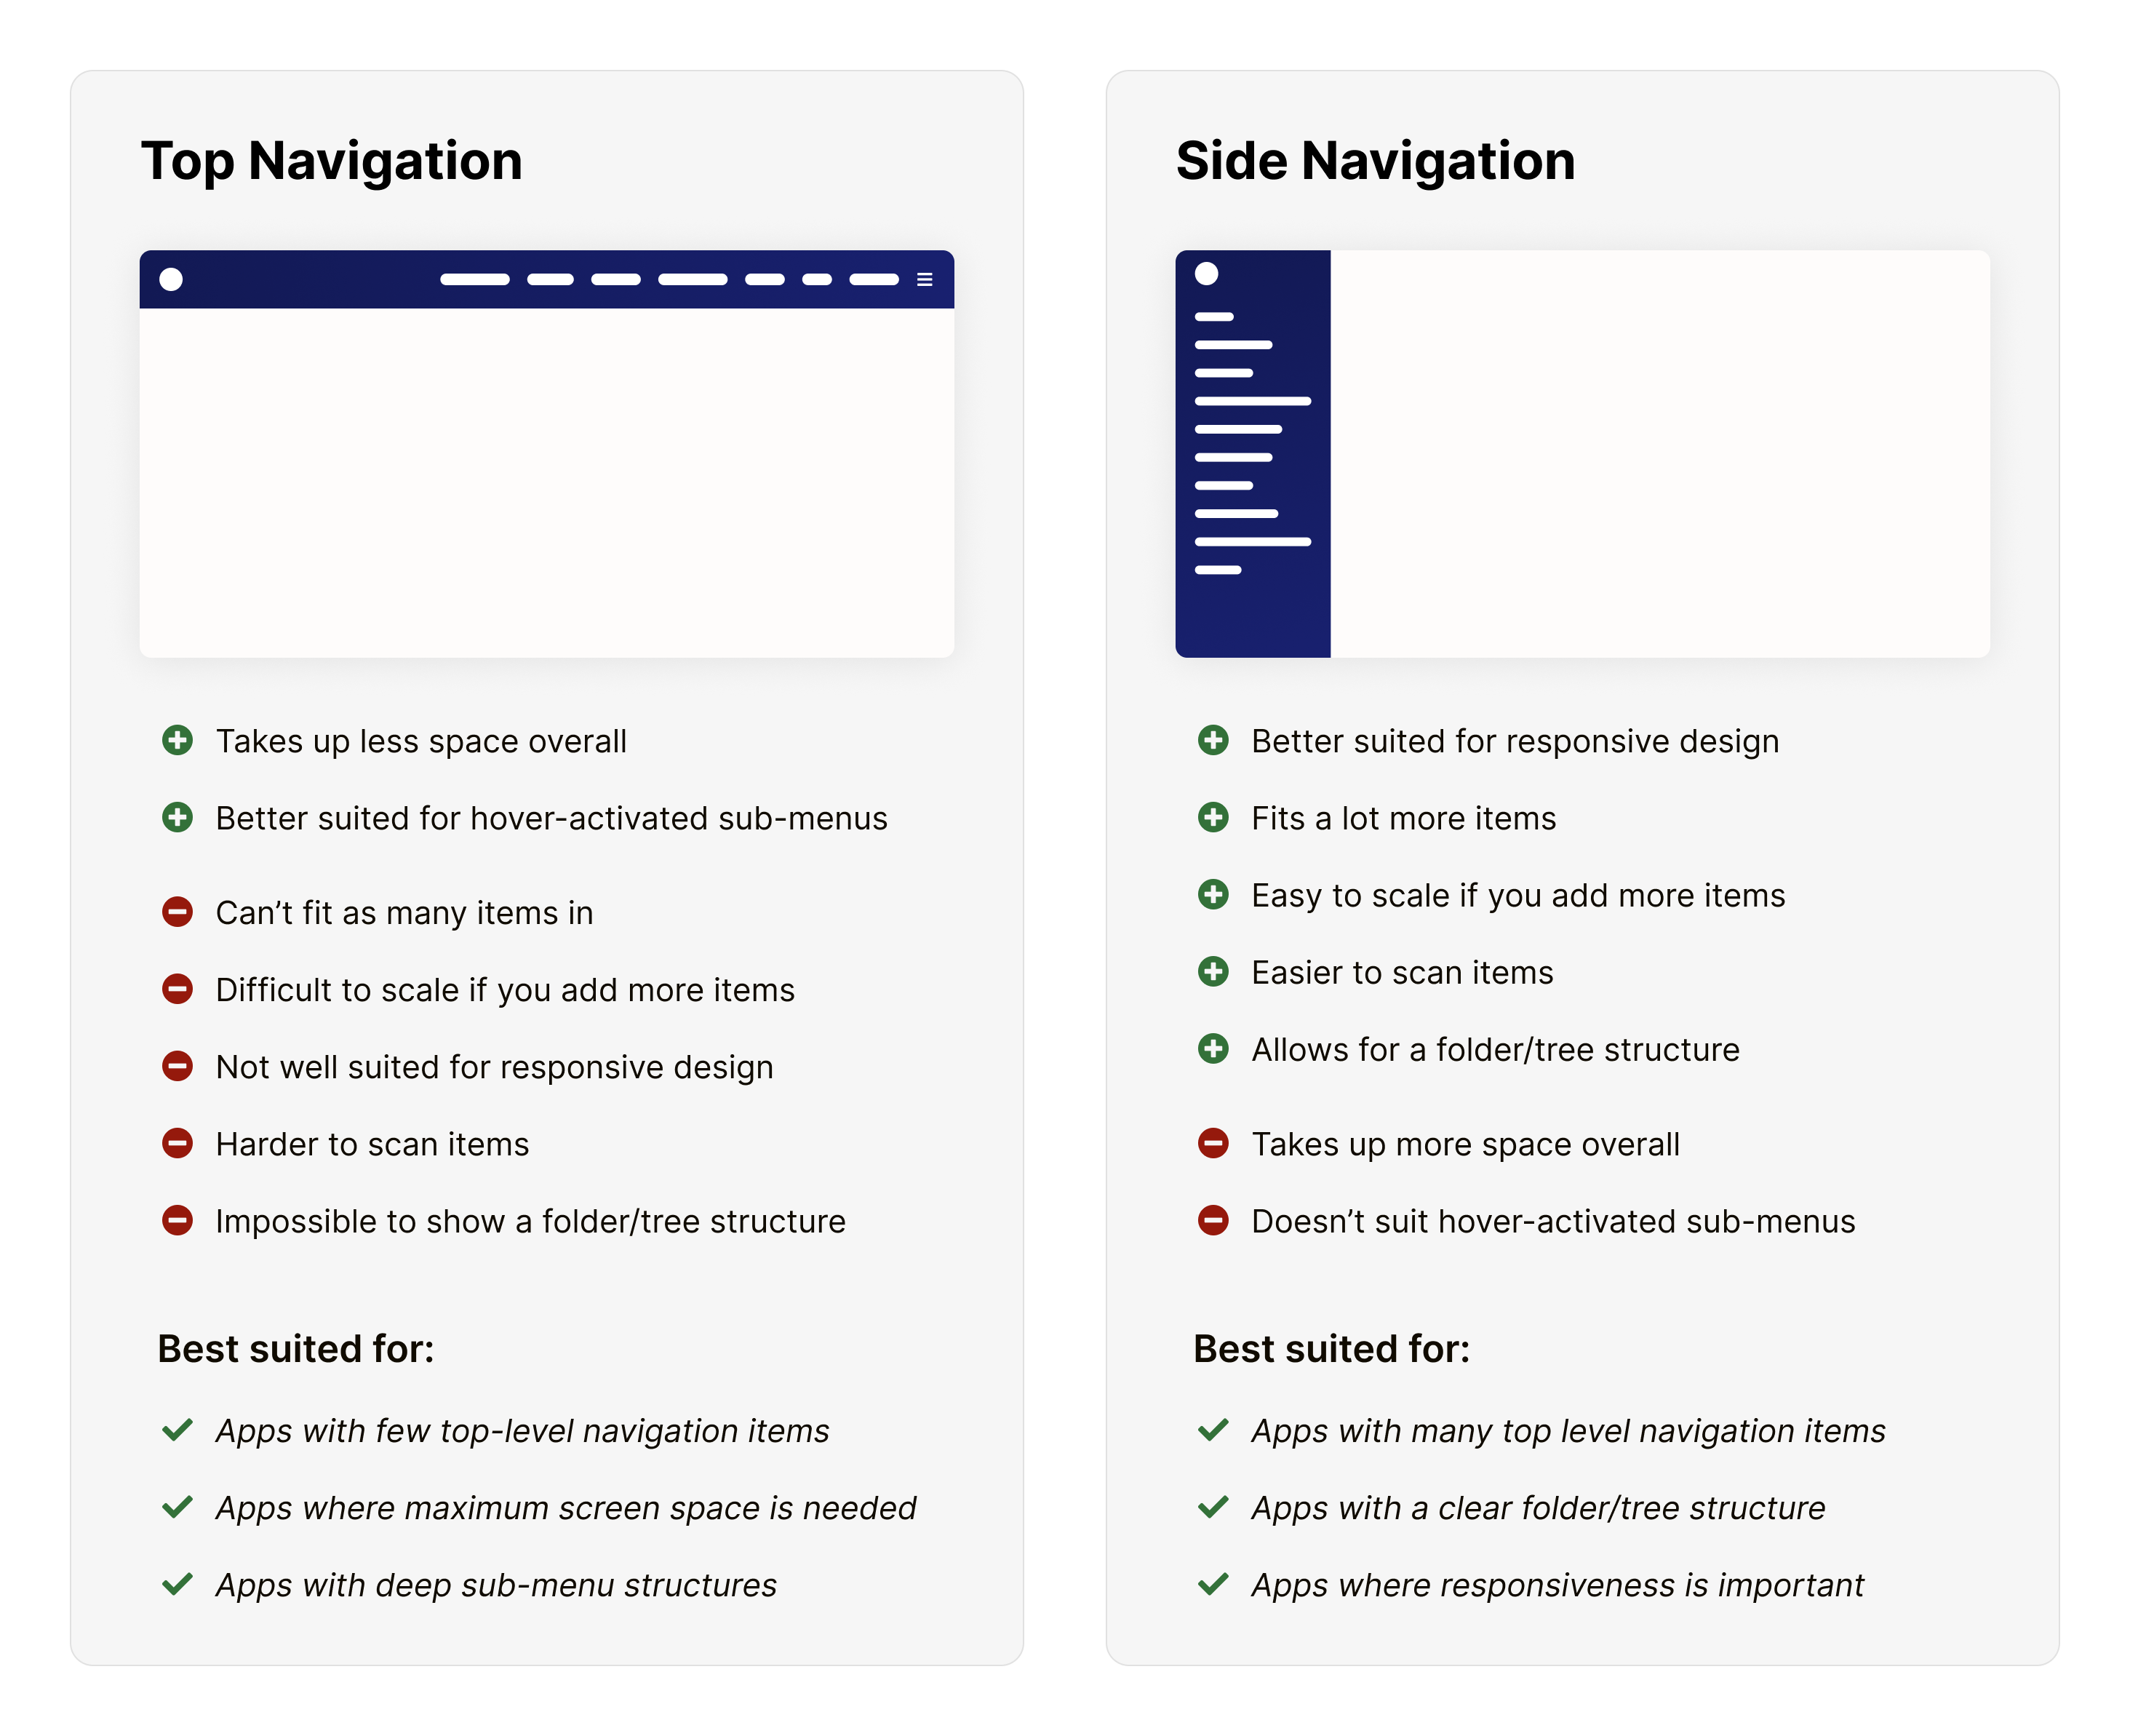 Guidelines for selecting Top vs. Side Navigation